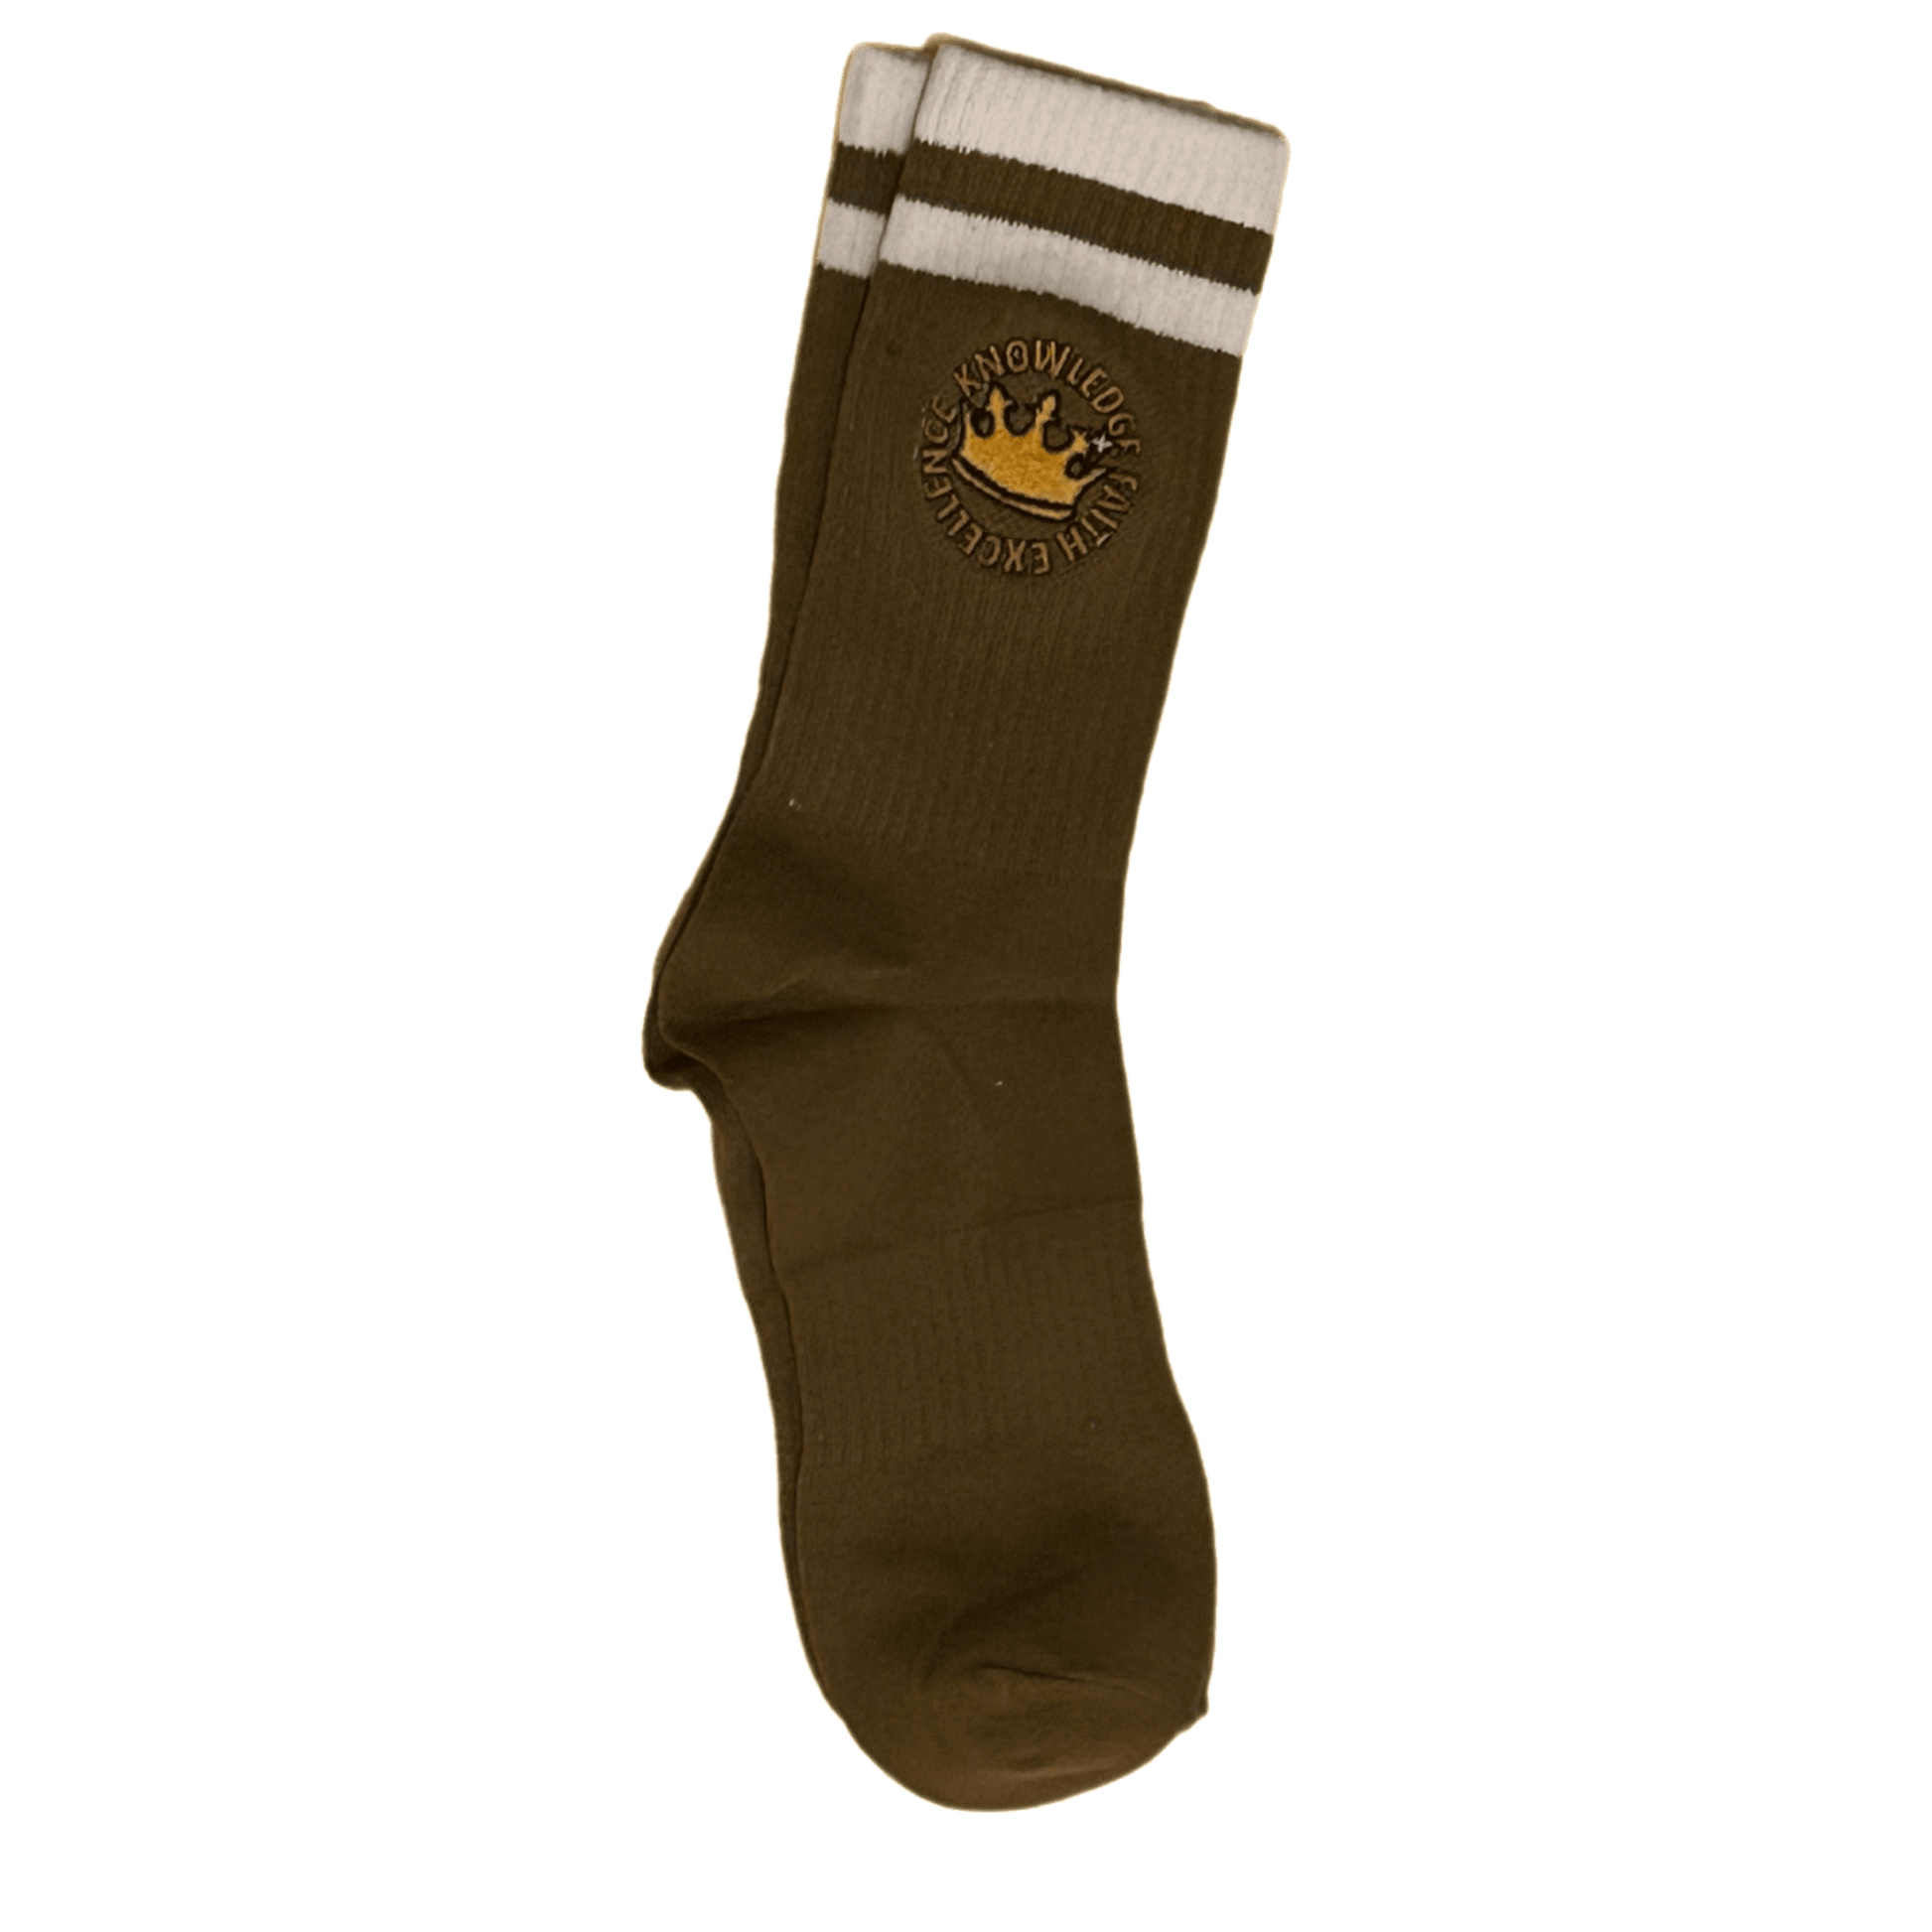 Black Excellence Socks in Brown